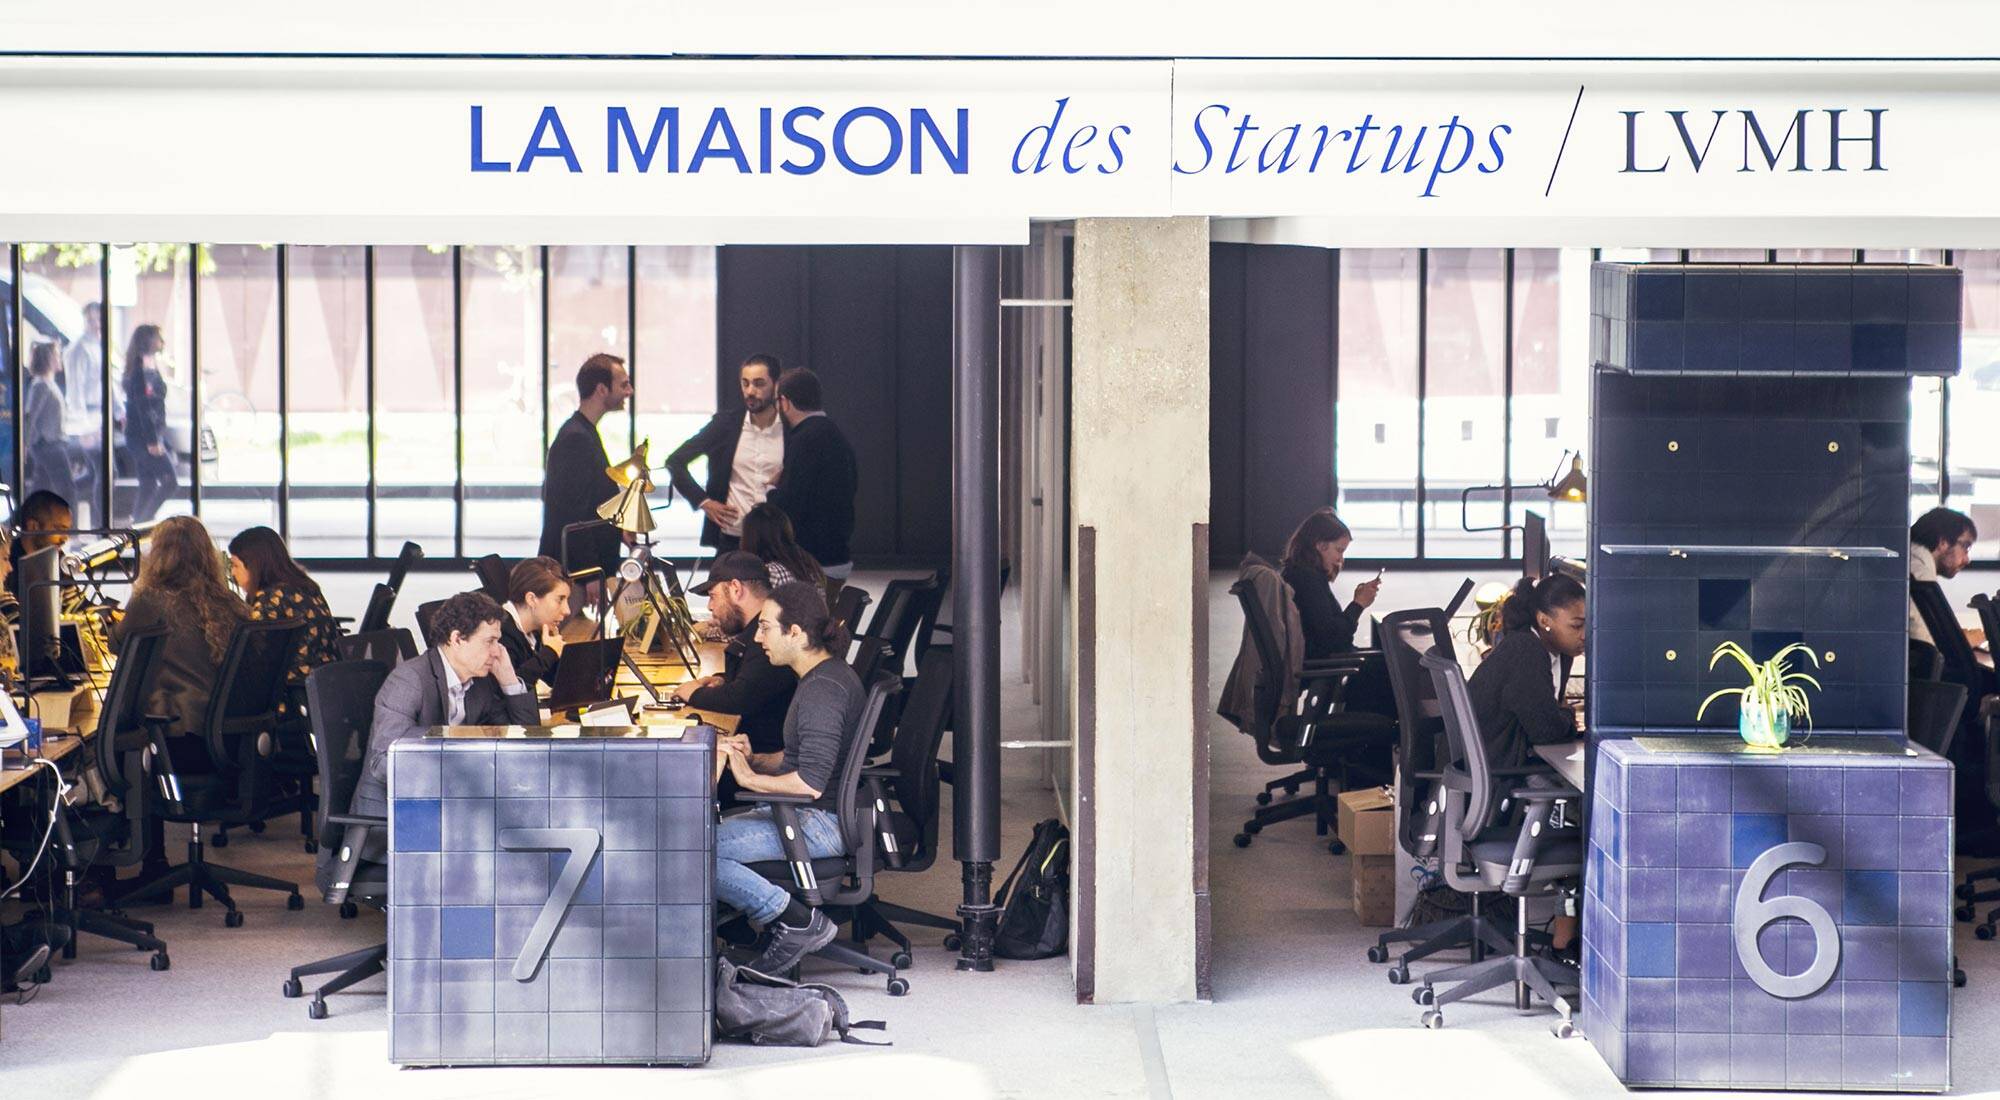 Inauguration of La Maison des Startups LVMH at STATION F 